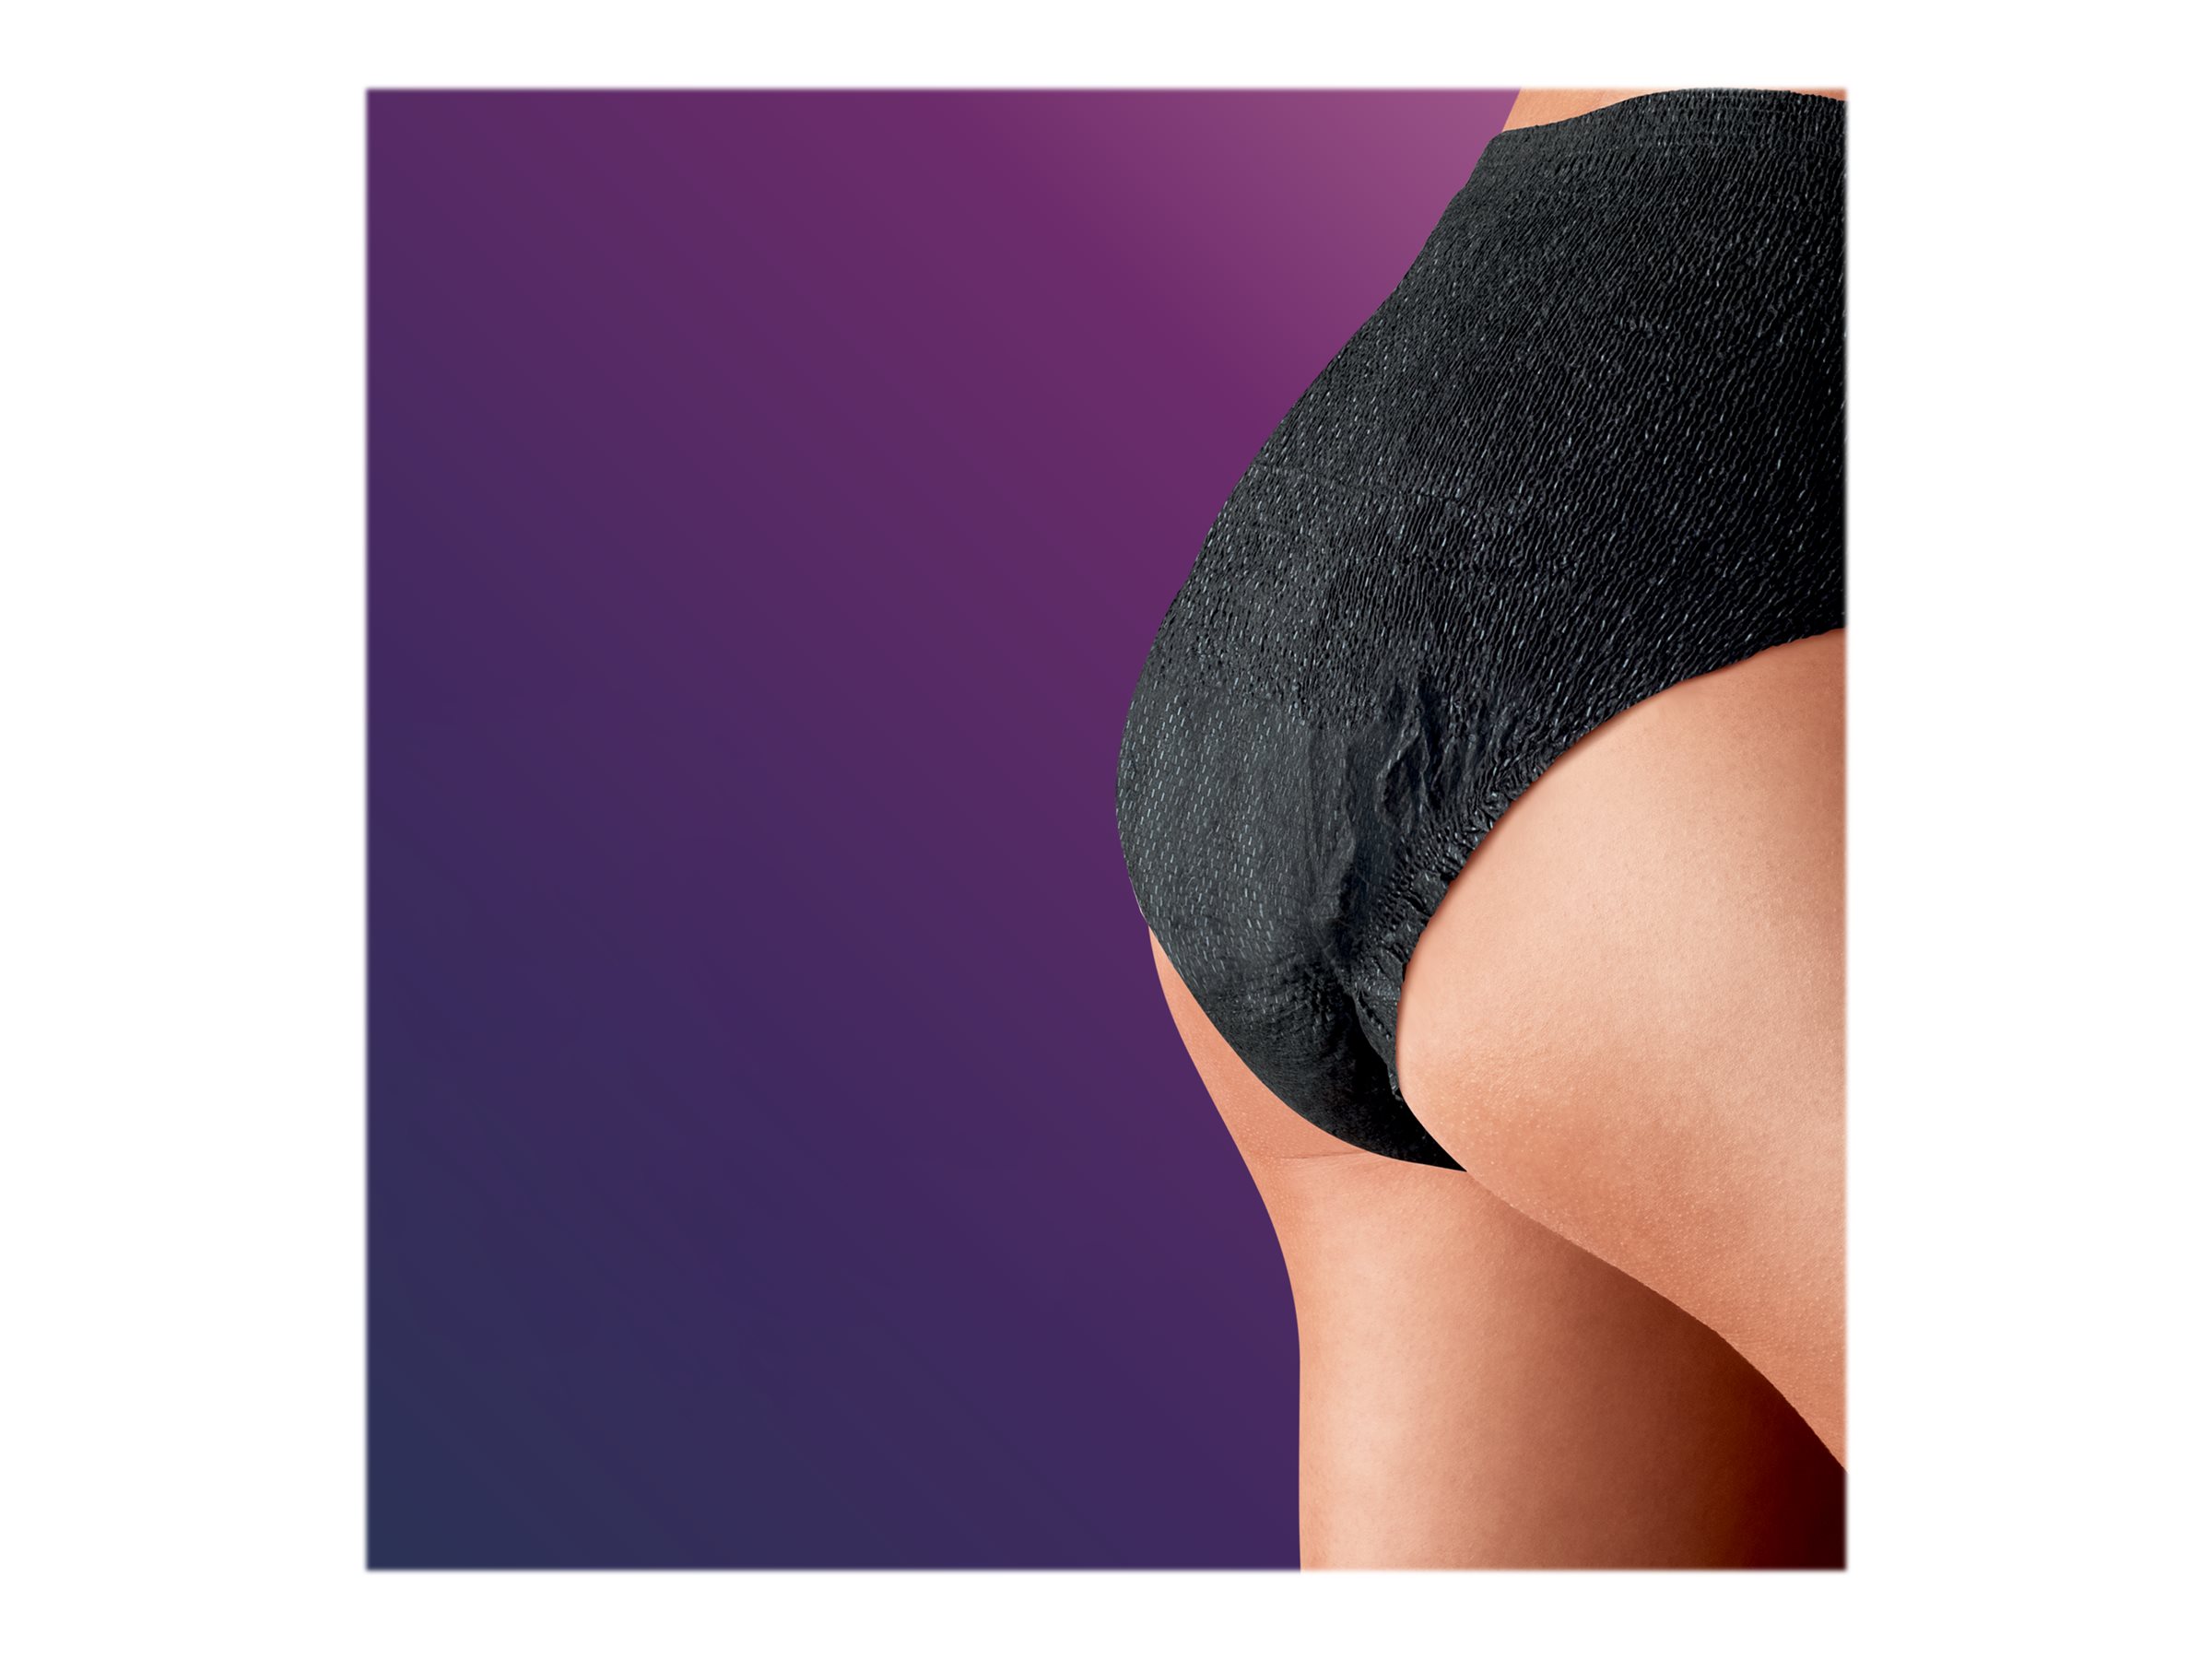 TENA Women Stylish Incontinence Maximum Underwear - Black - S/M - 18s